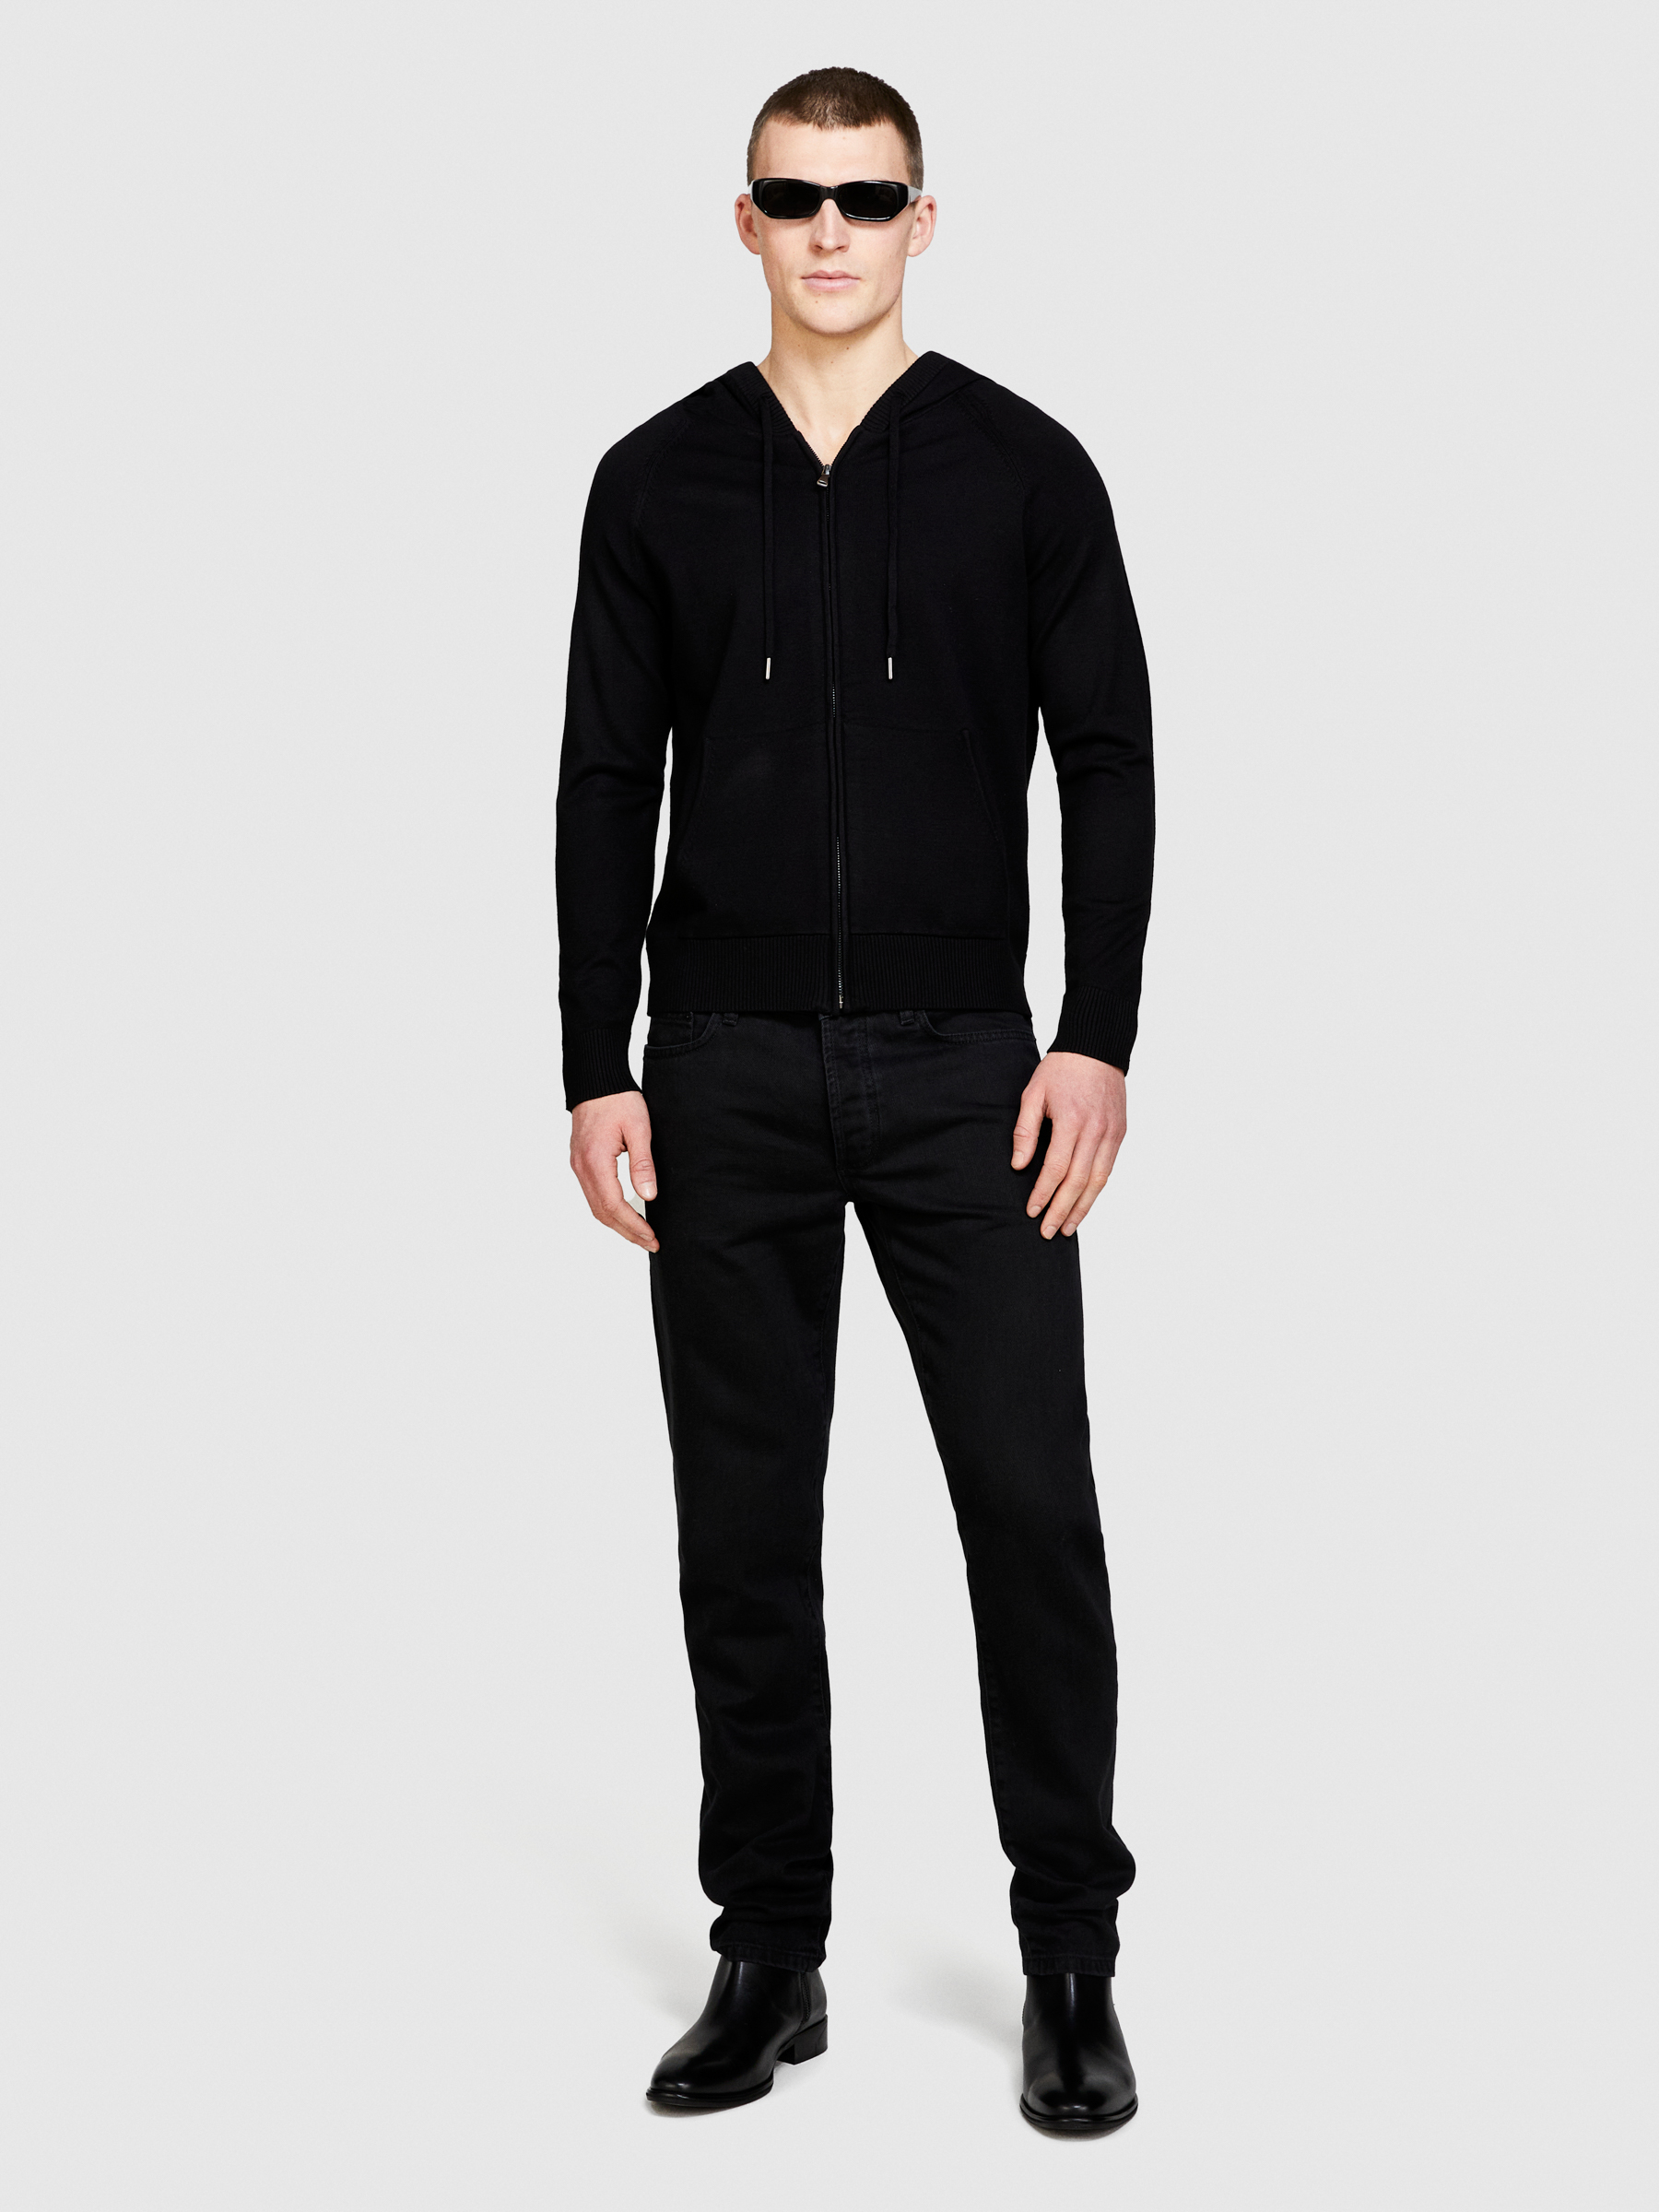 Sisley - Berlin Slim Fit Colored Jeans, Man, Black, Size: 28